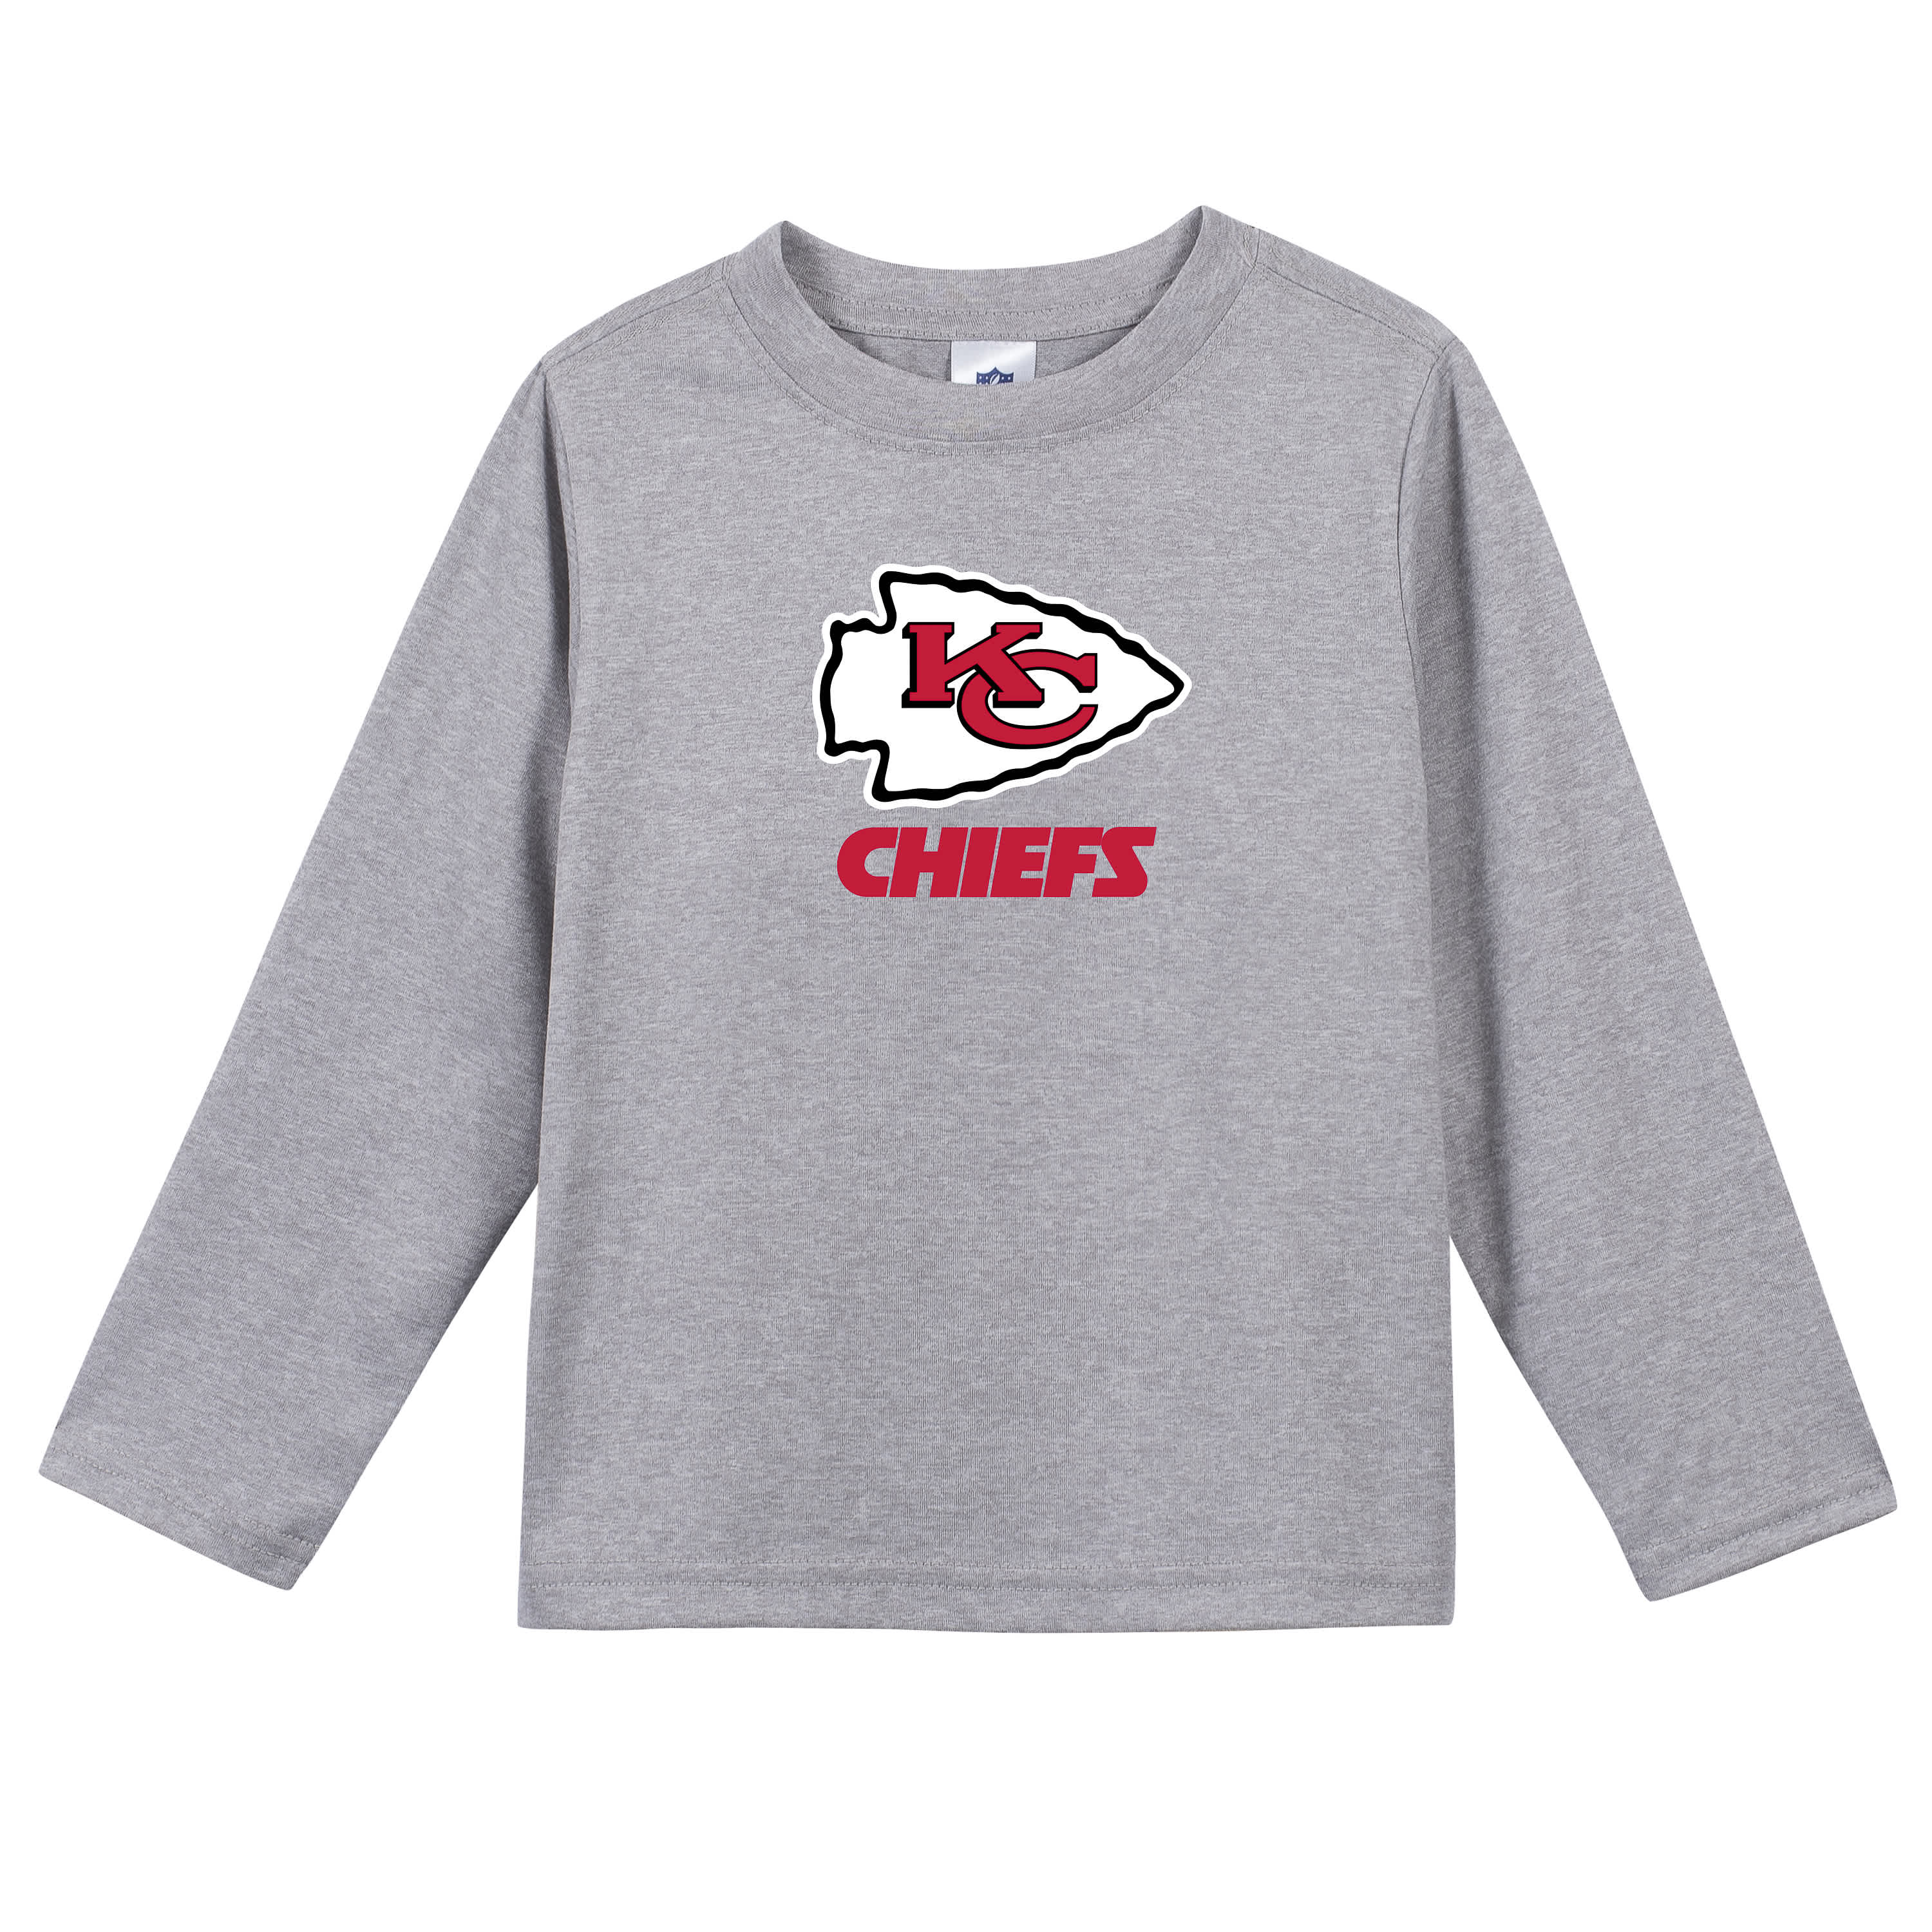 Kansas City Chiefs Toddler Boys Long Sleeve Tee Shirt